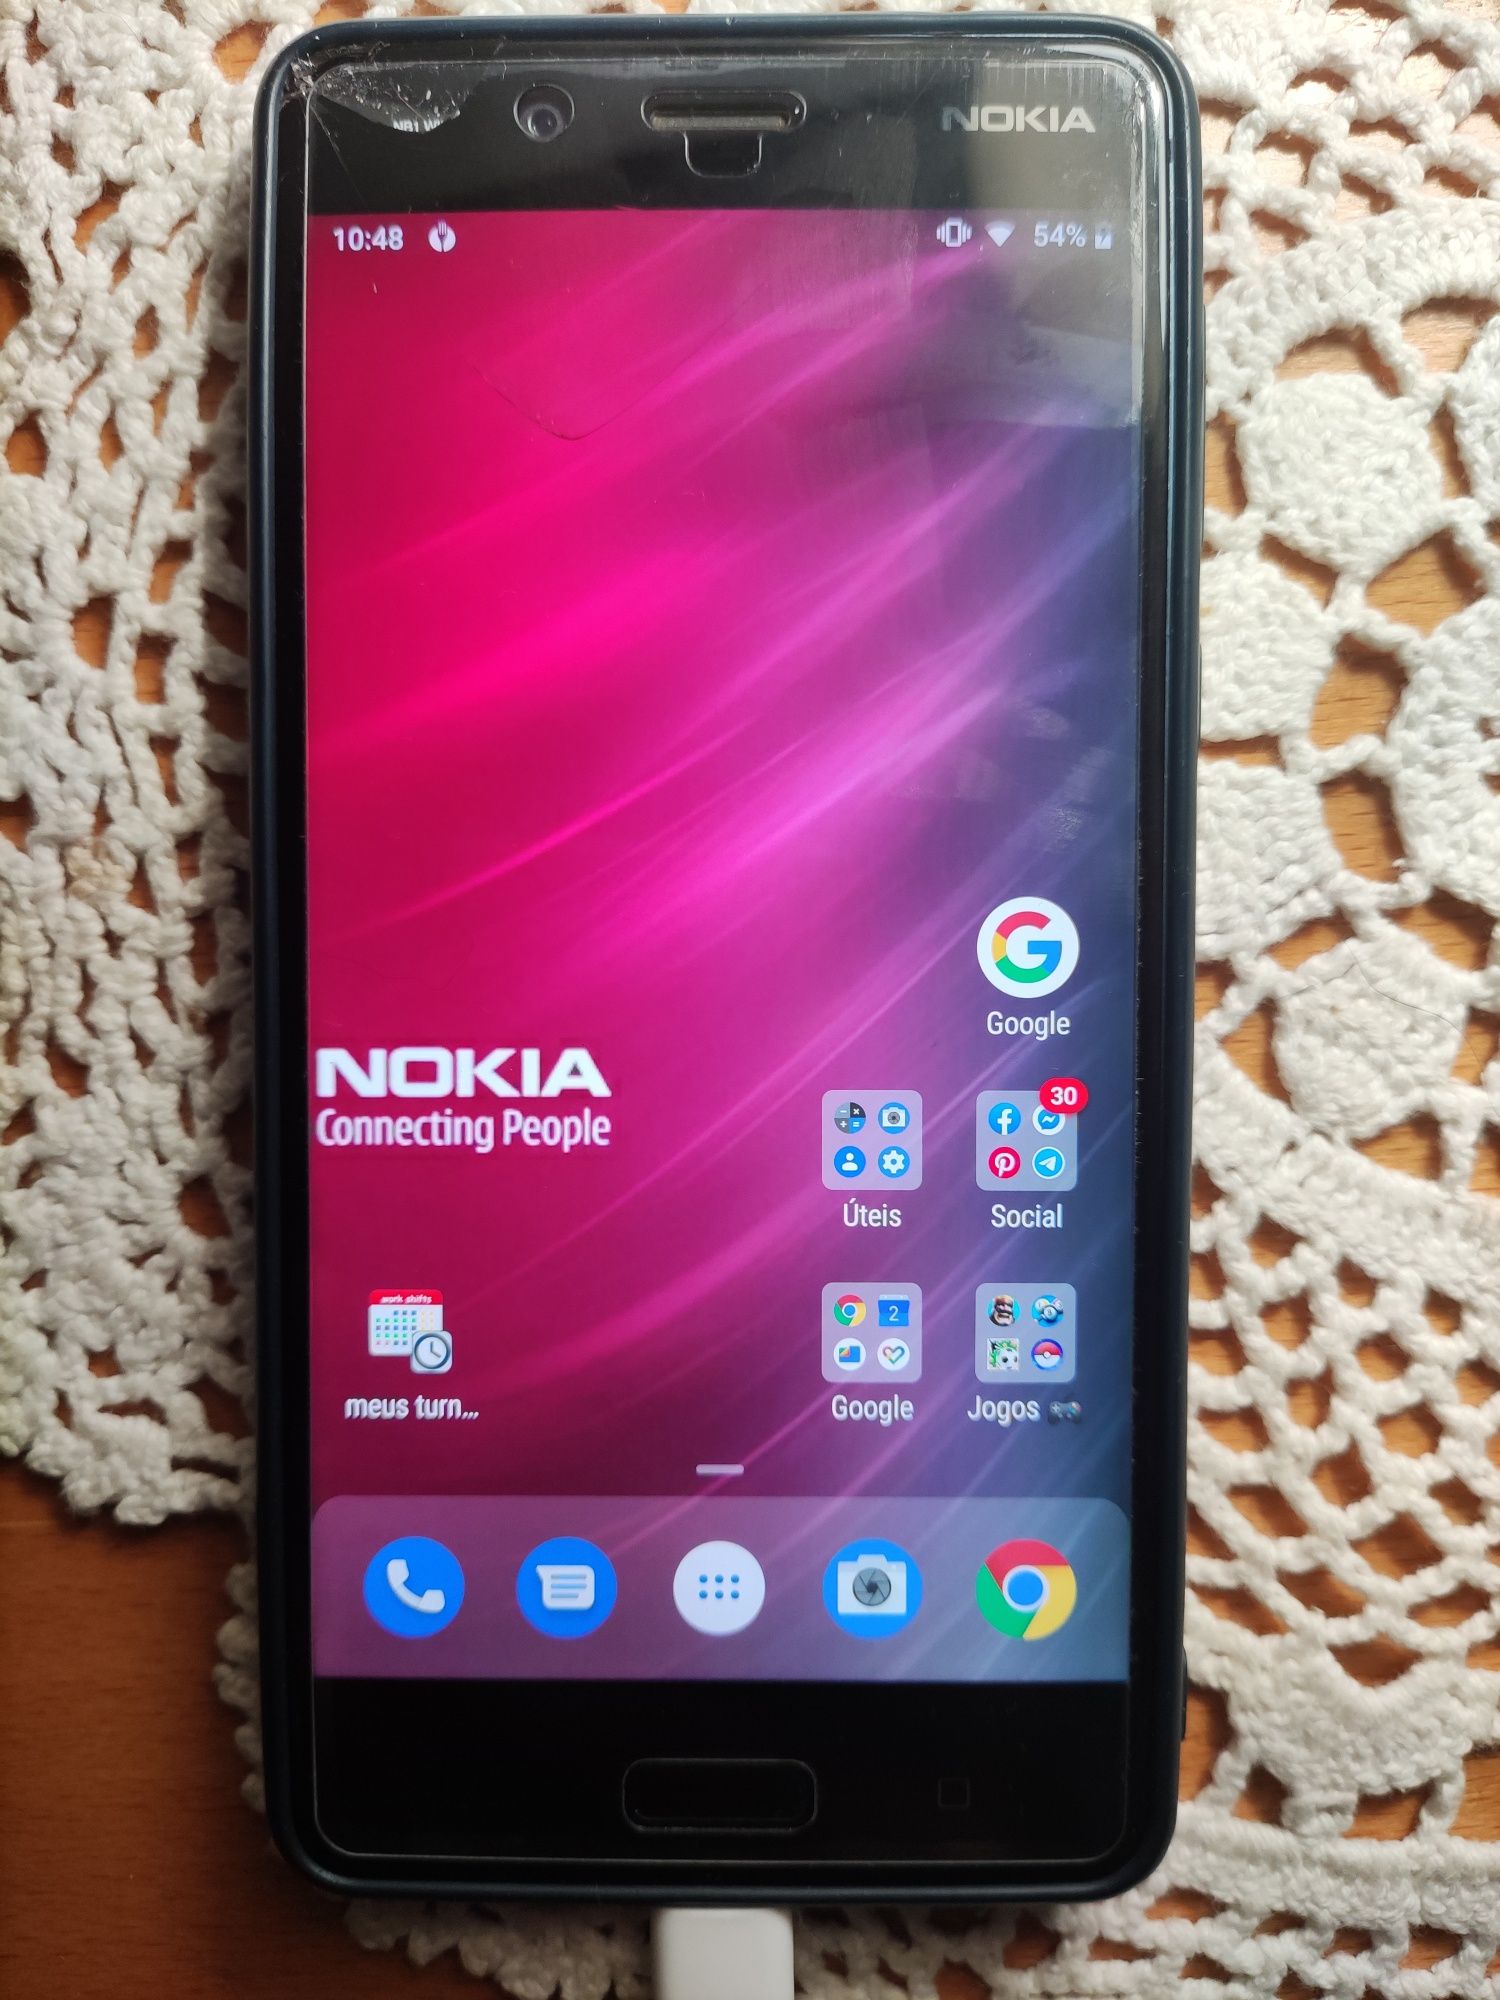 Nokia 8 Android